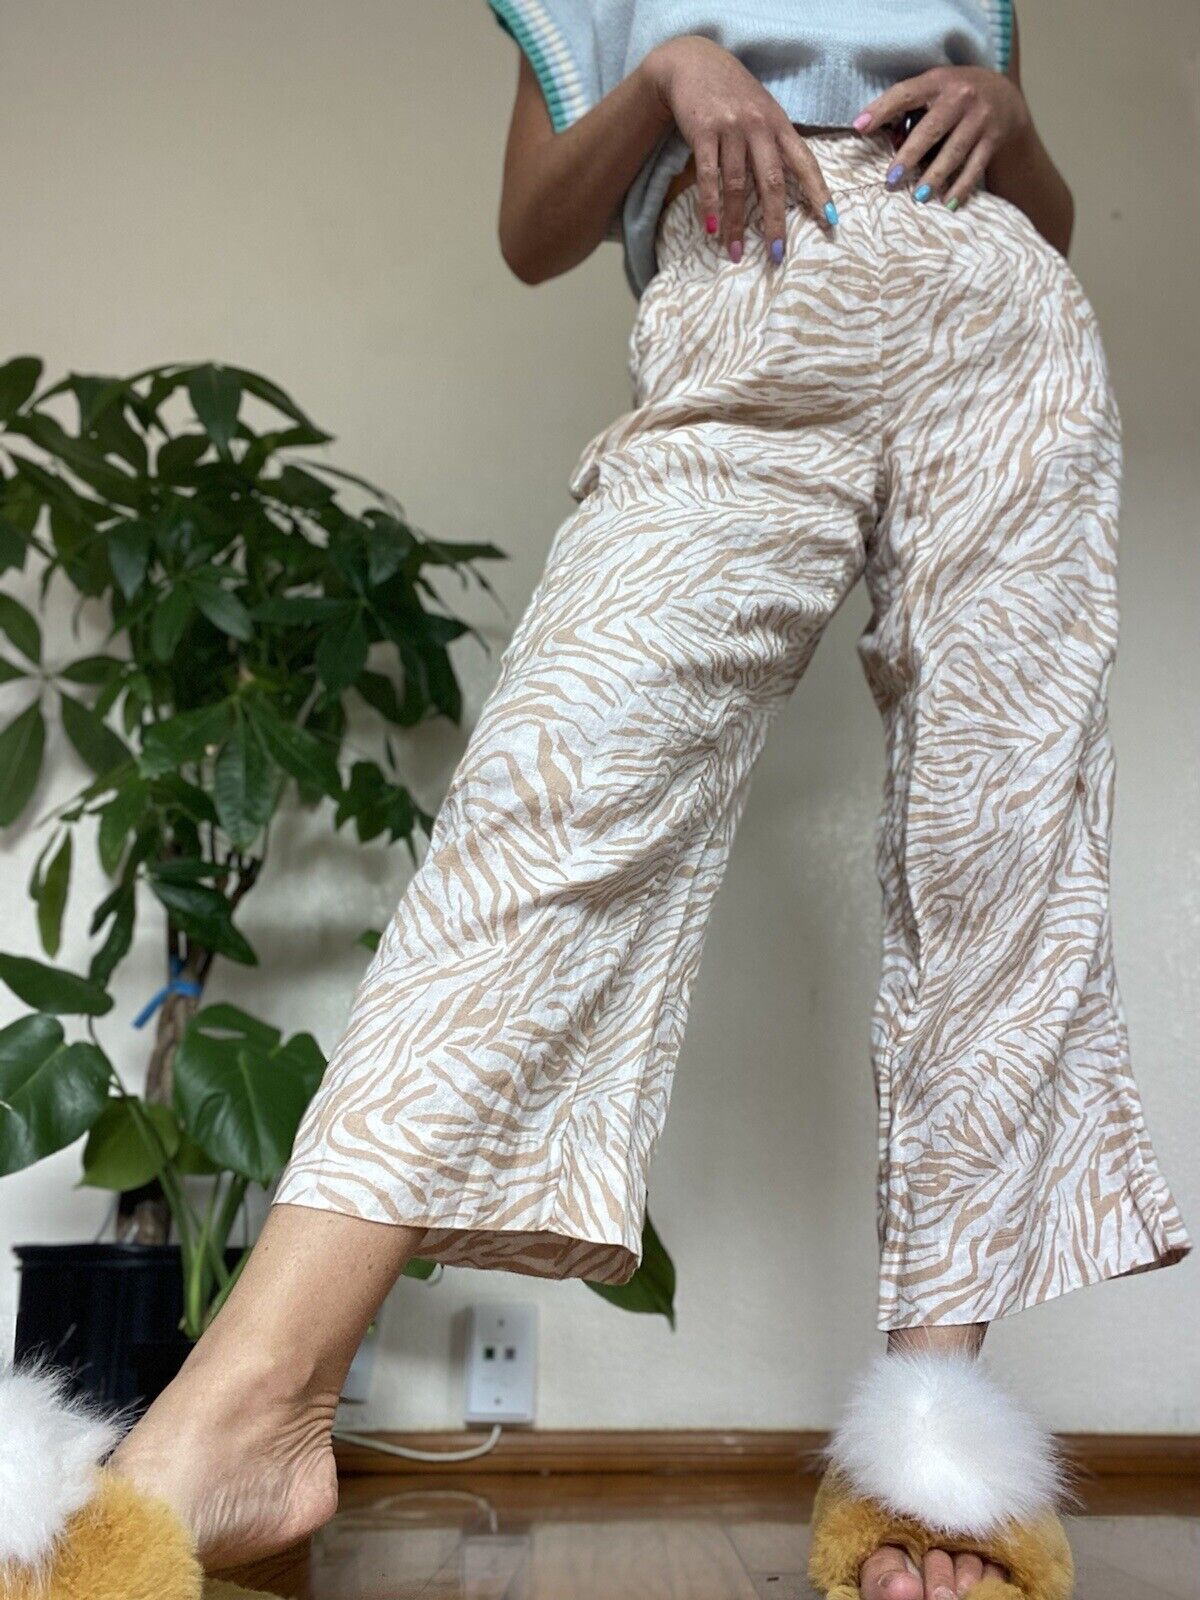 Zebra Print Linen Pants - Nicole Miller - Women’s Small # 2598